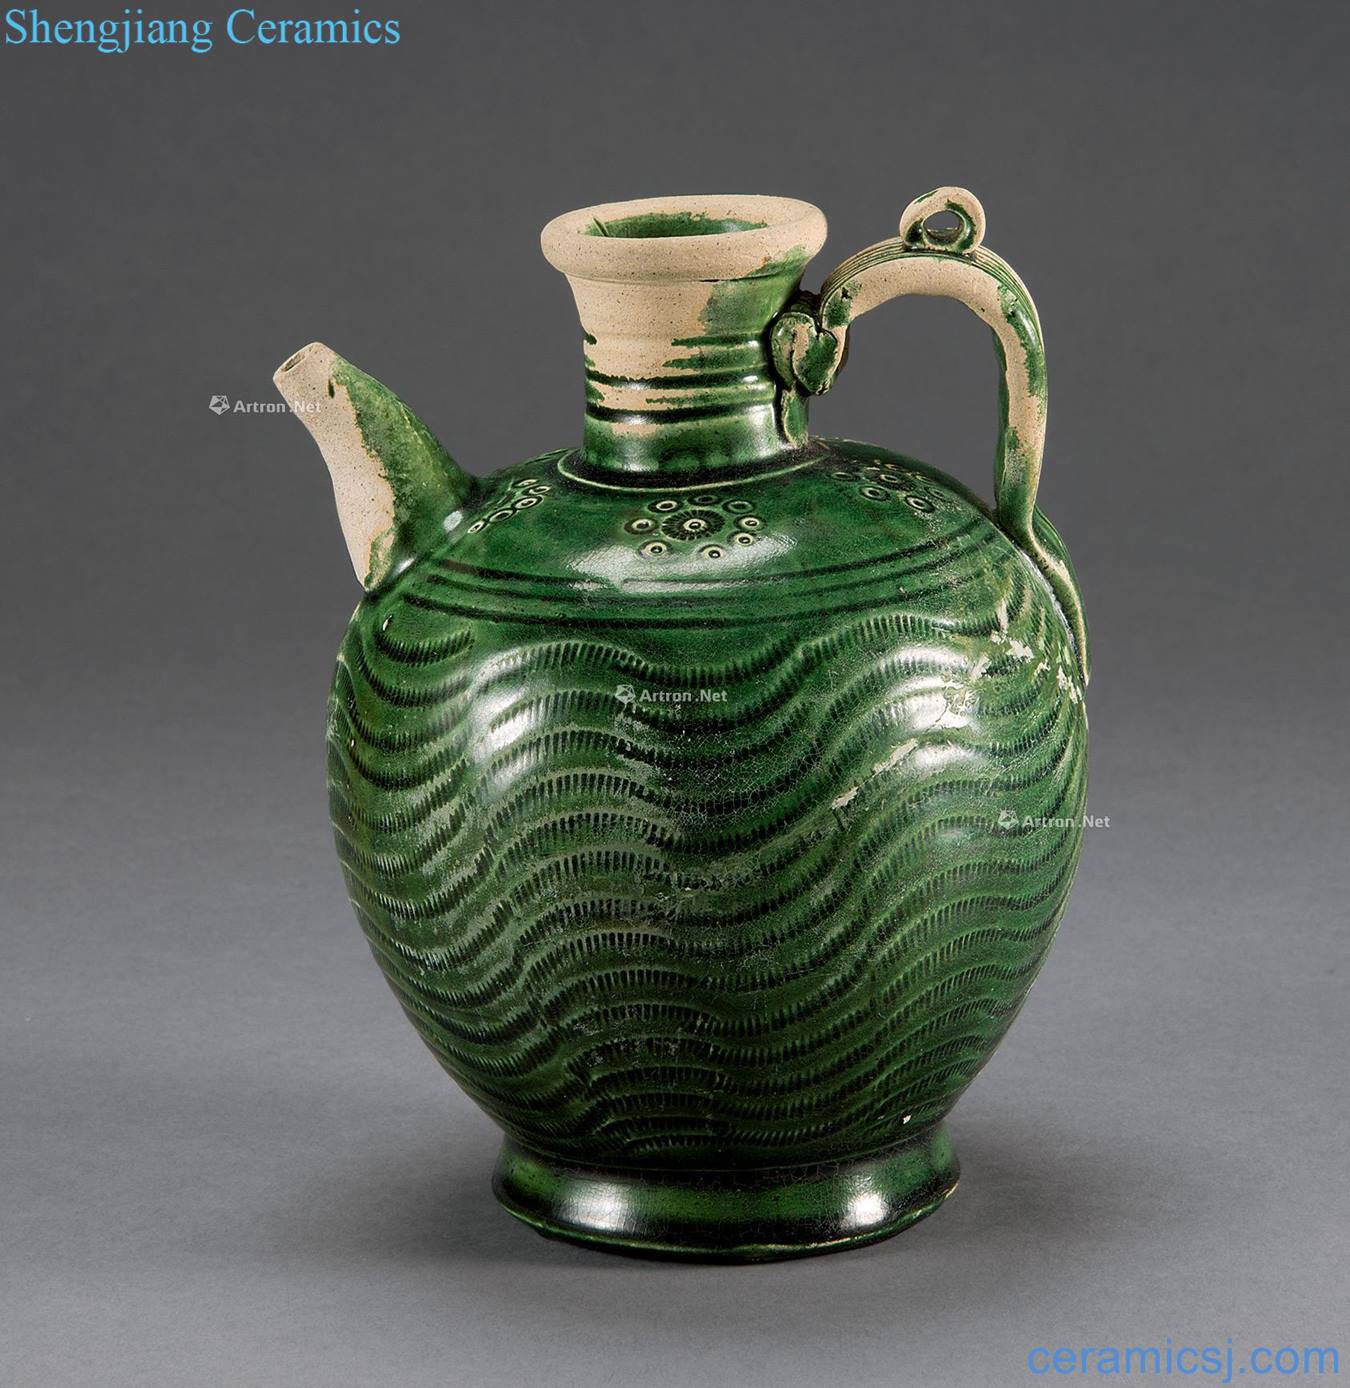 The song dynasty Henan county kiln green glaze water ripple ewer